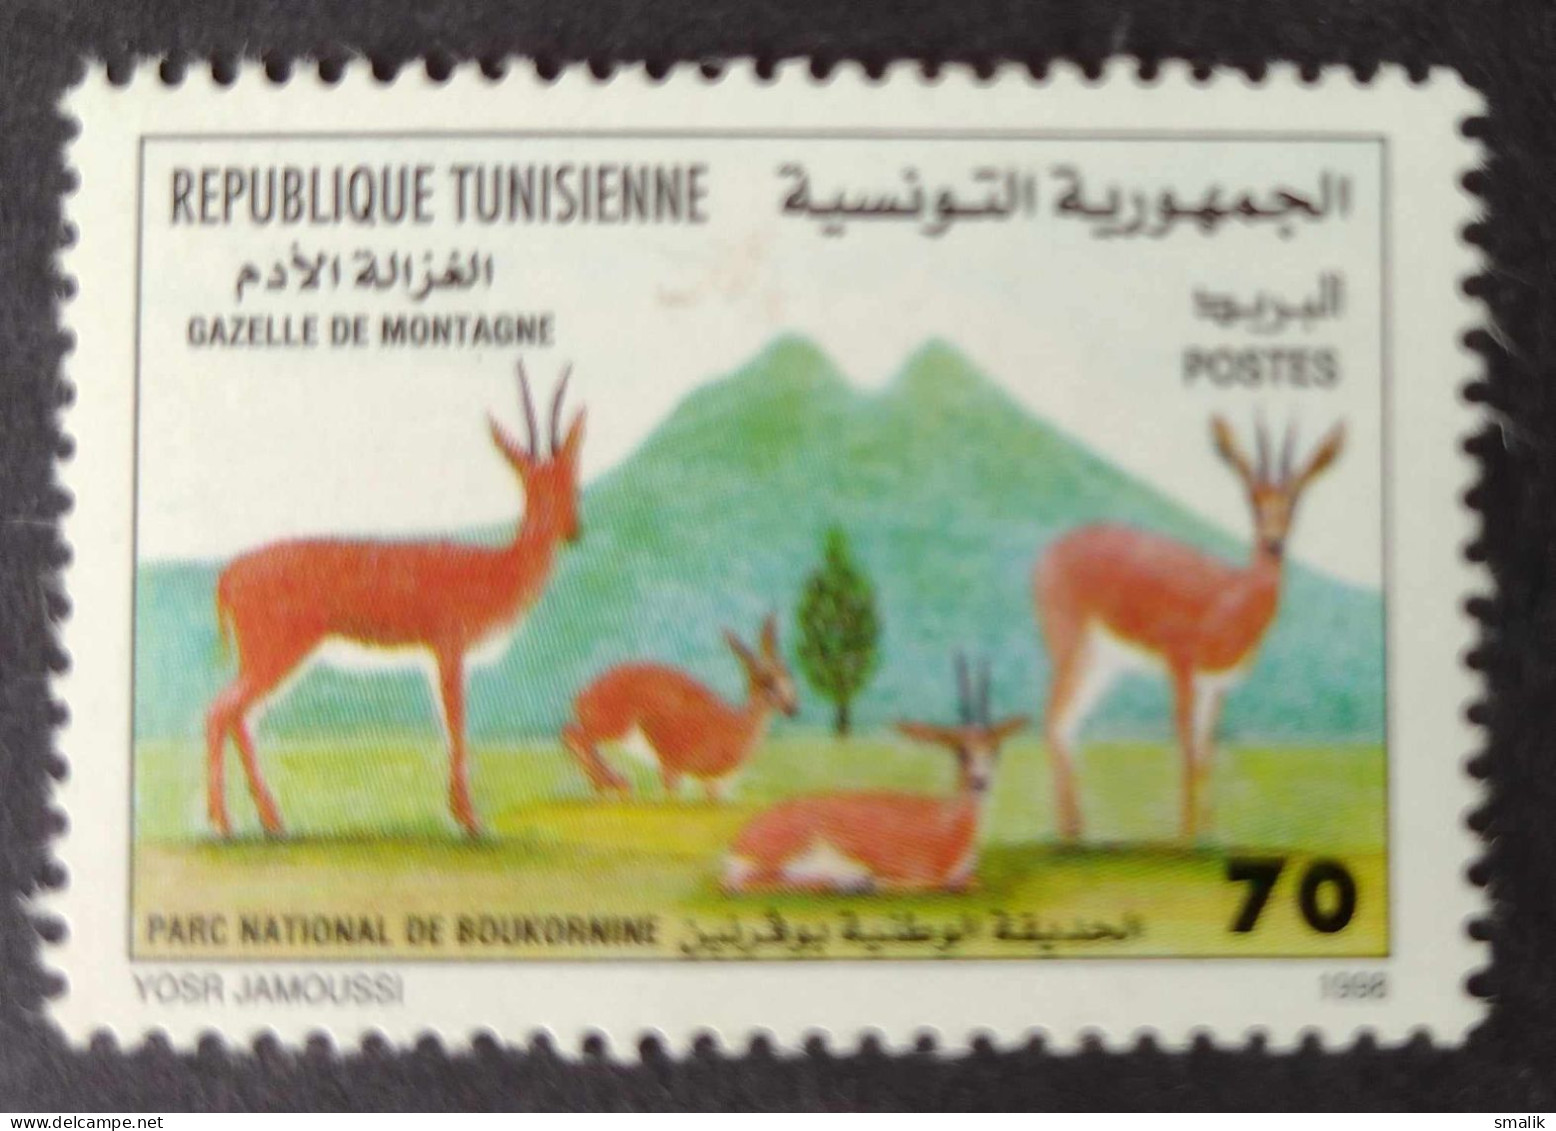 TUNIS TUNISIA 1998 - Gazelle Animals, MNH - Tunisia